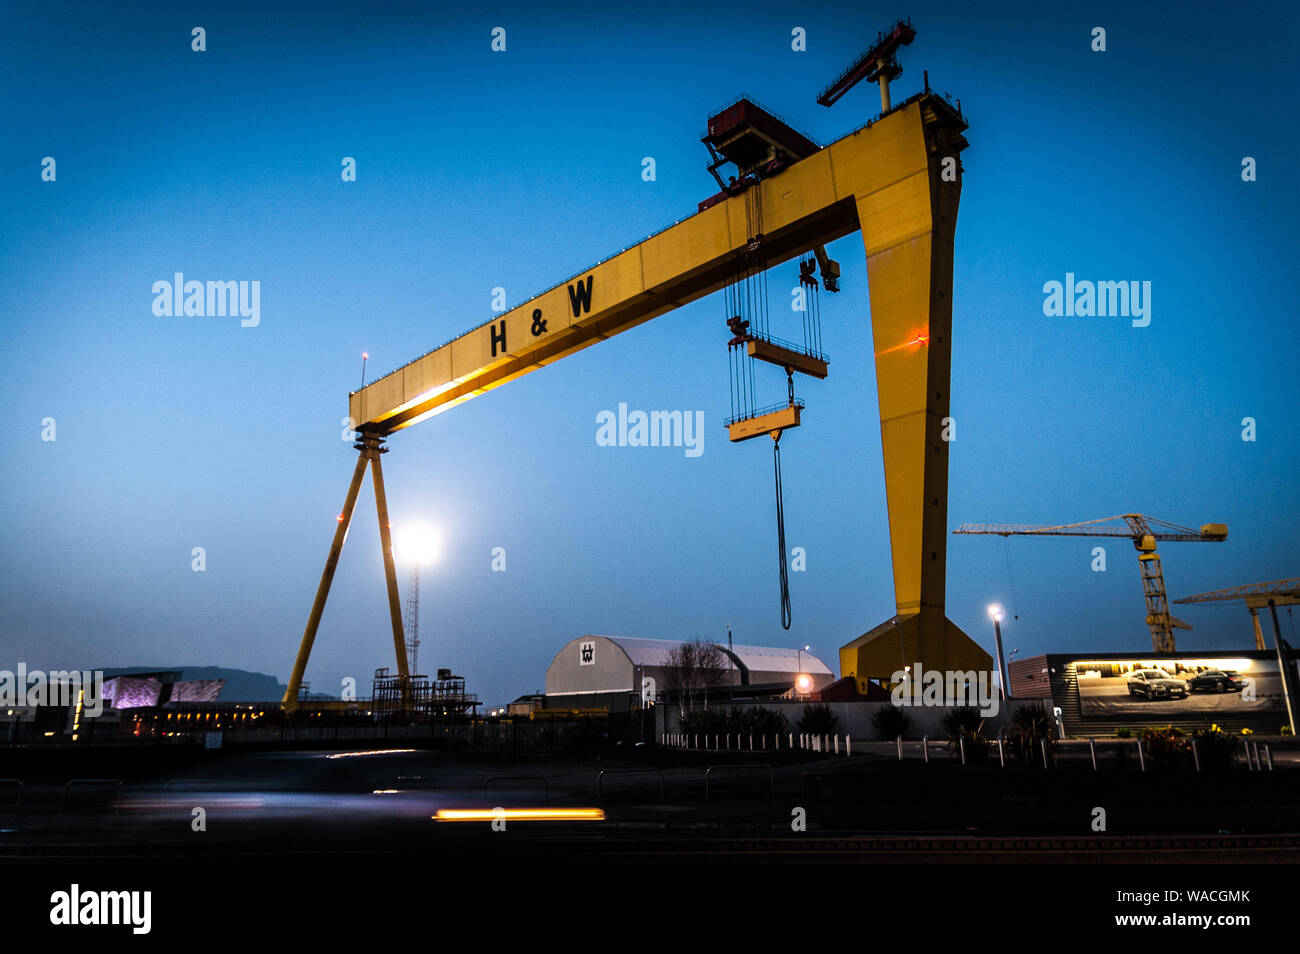 Harland and Wolff shipyard crane at night Stock Photo